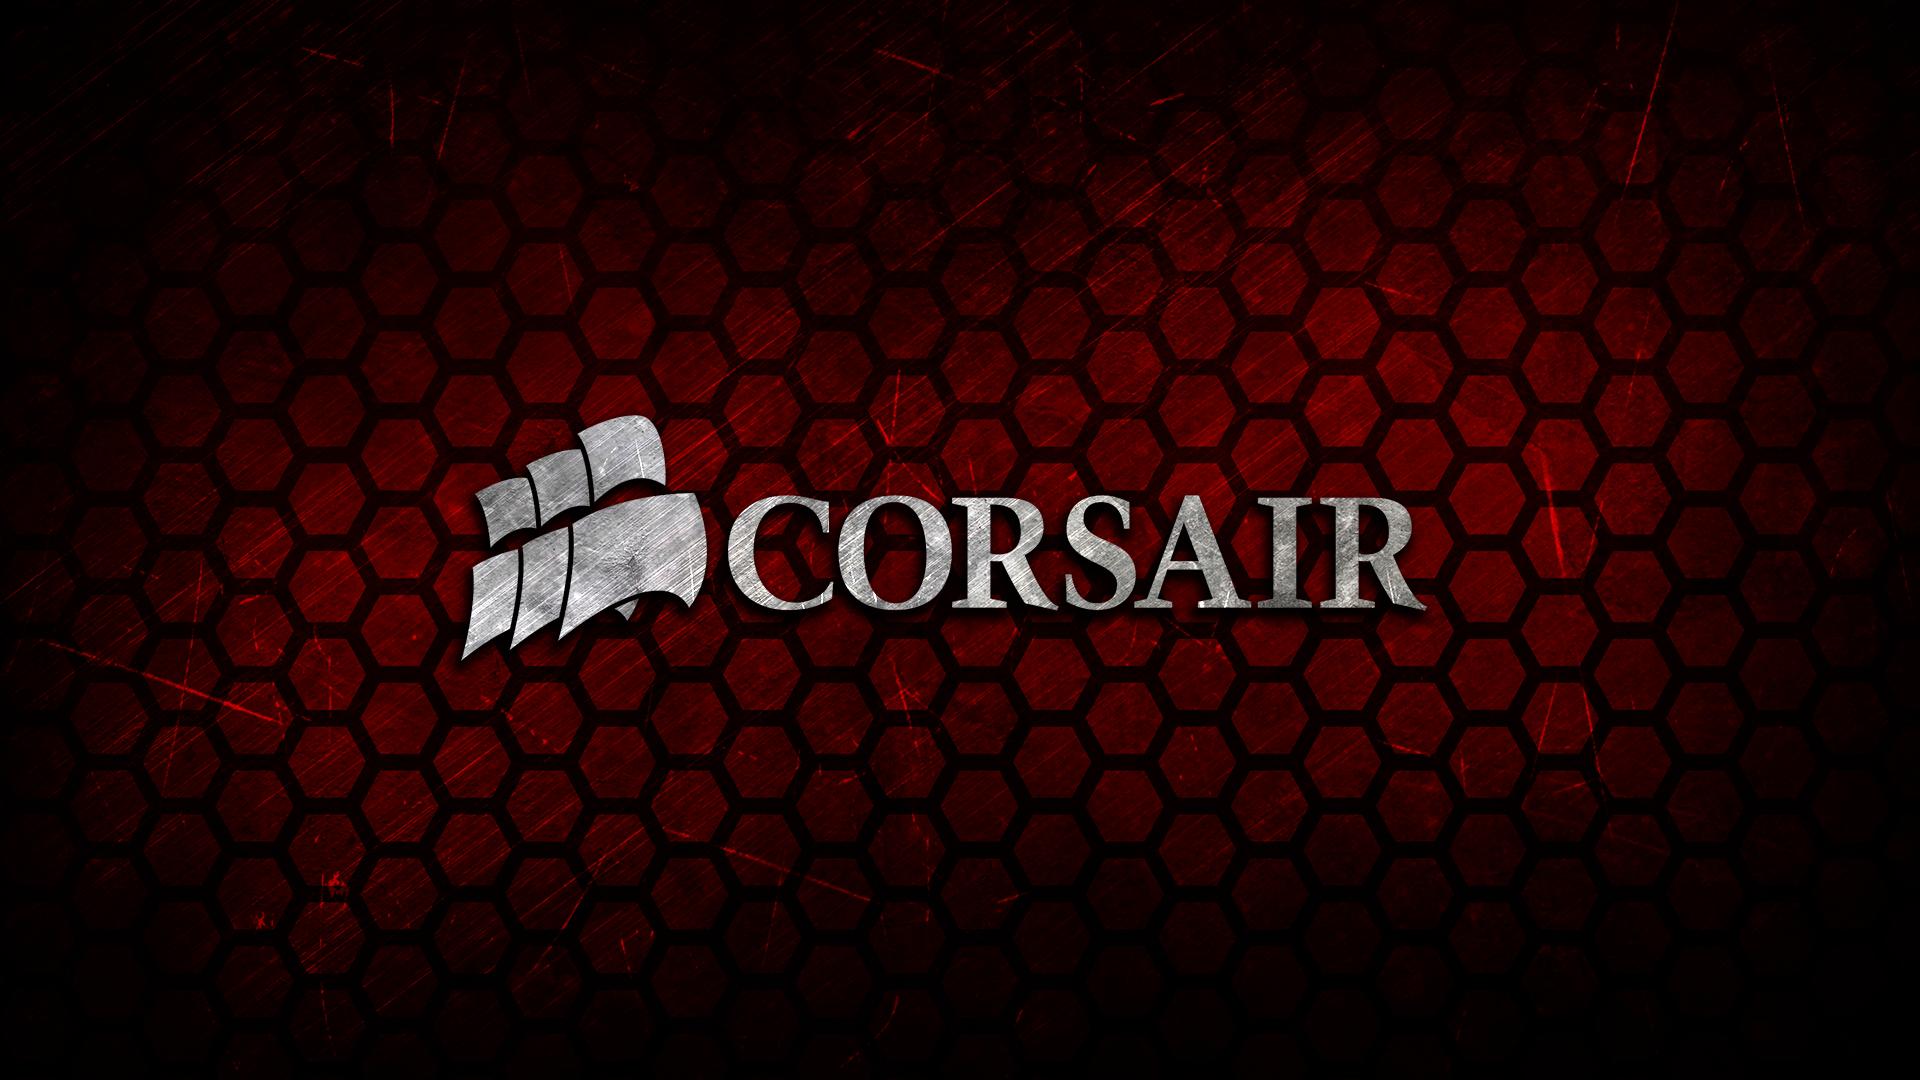 Corsair RGB  VIDEO  Wallpaper engine by MrRichardEdits on DeviantArt